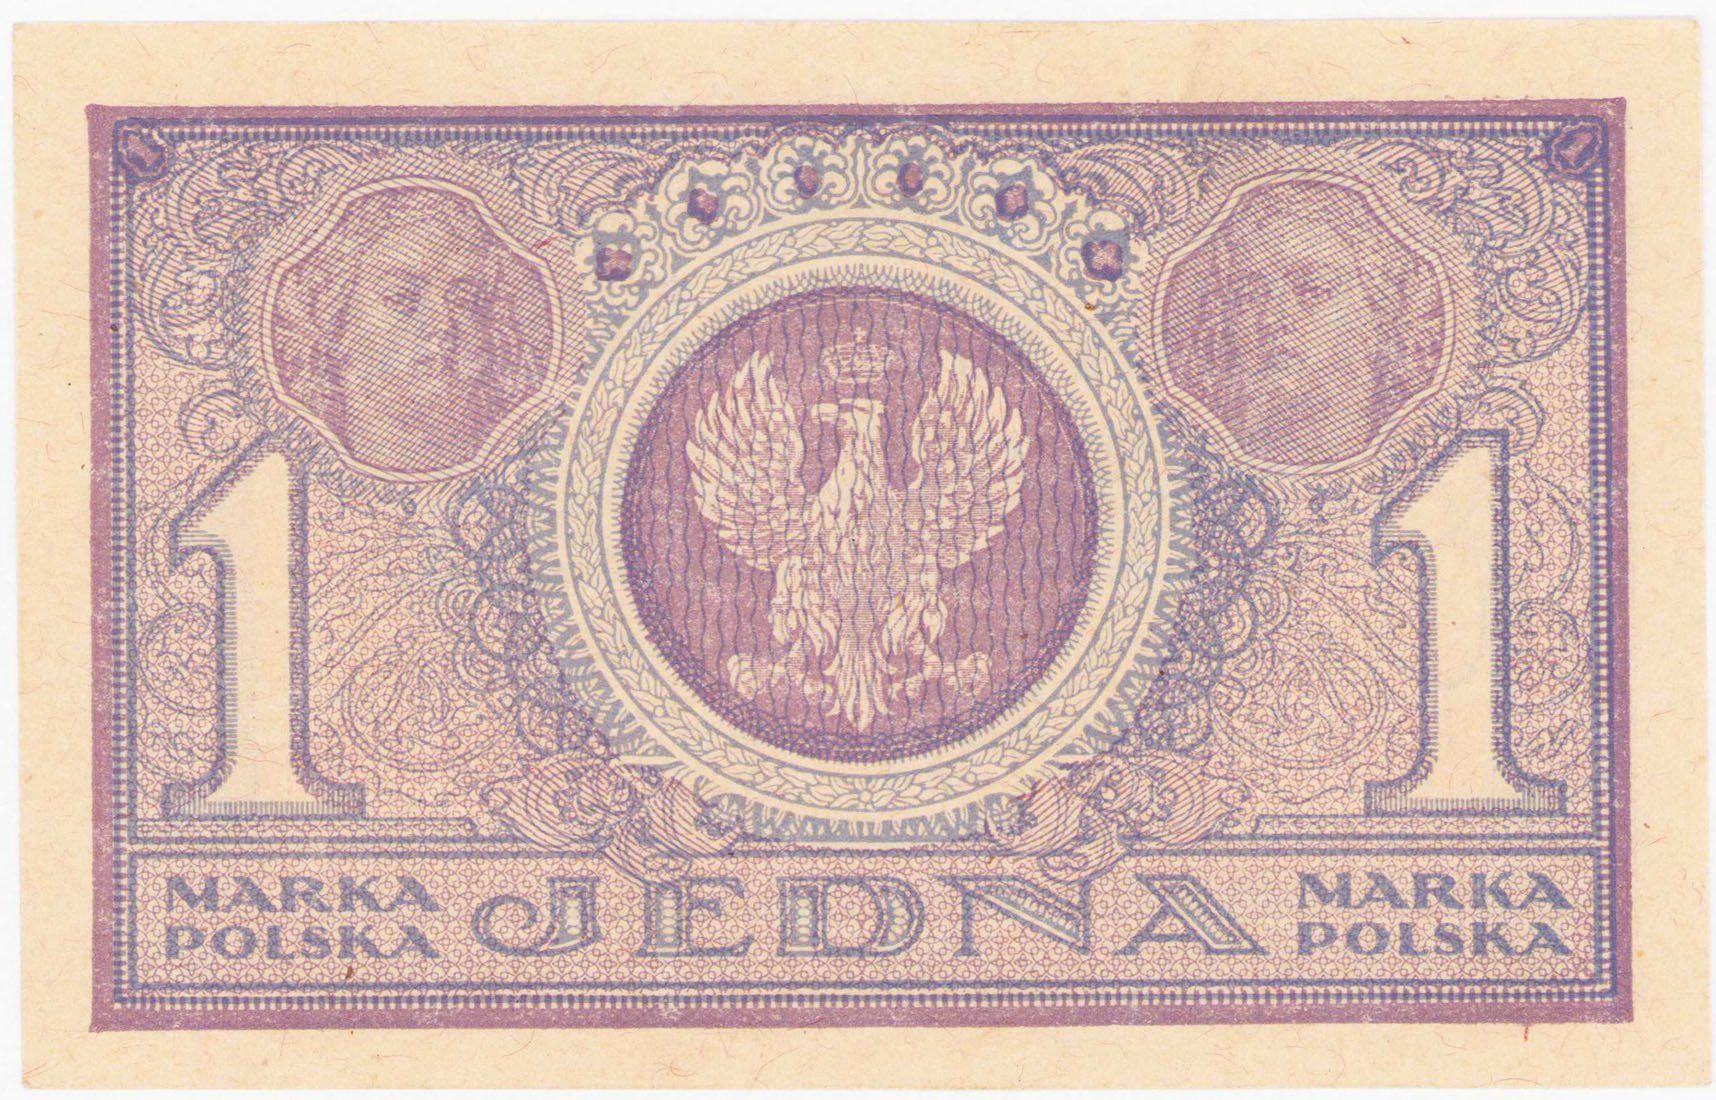 1 marka polska 1919 seria IAS